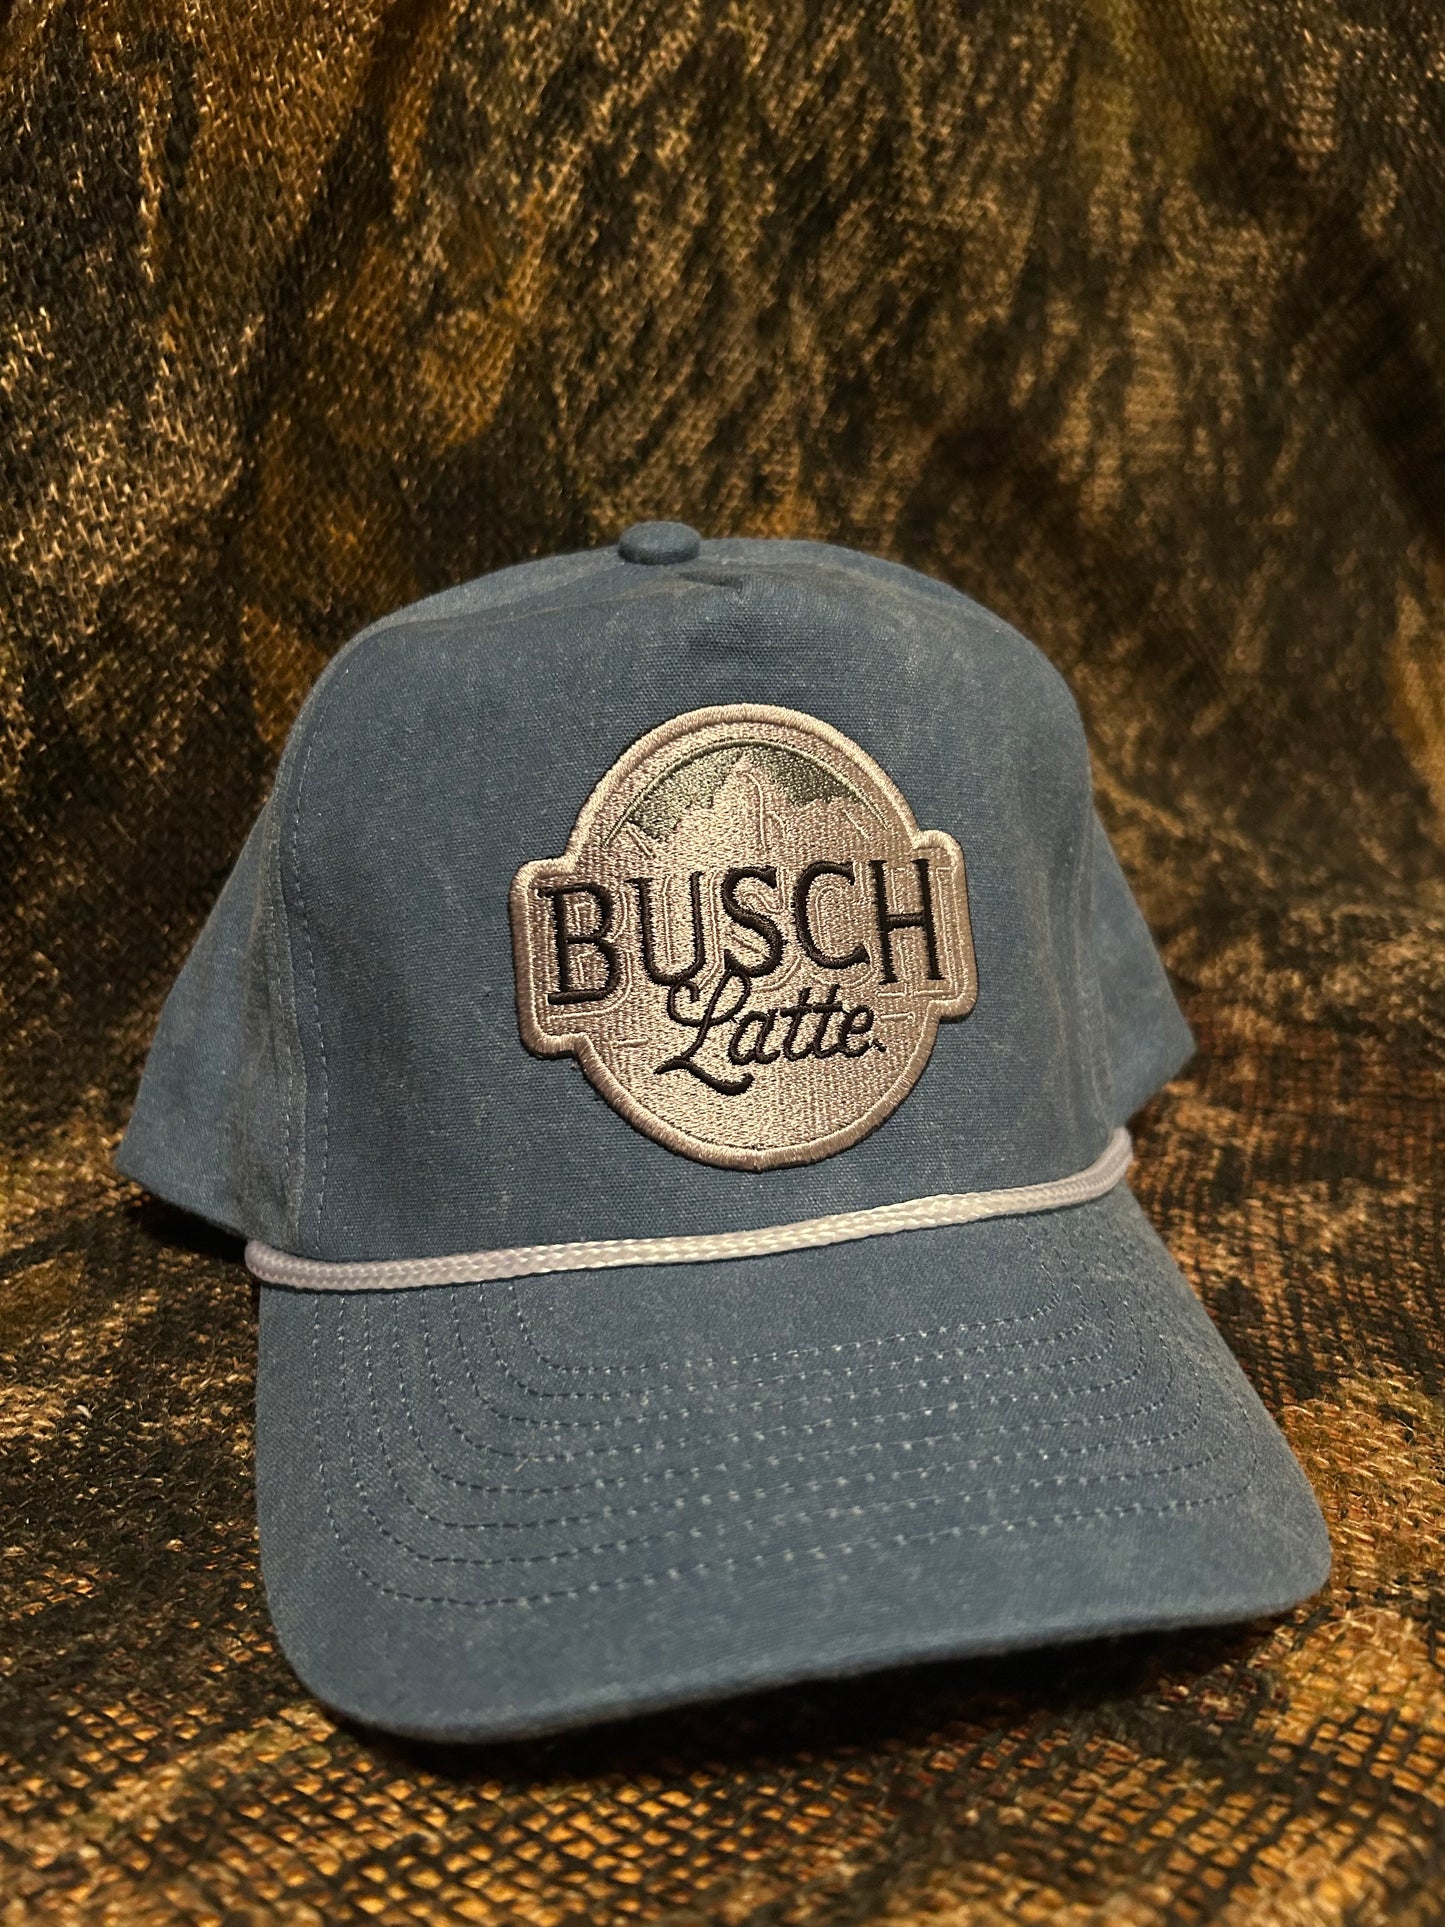 Busch Latte patch on a Baby Blue ropebrim SnapBack hat